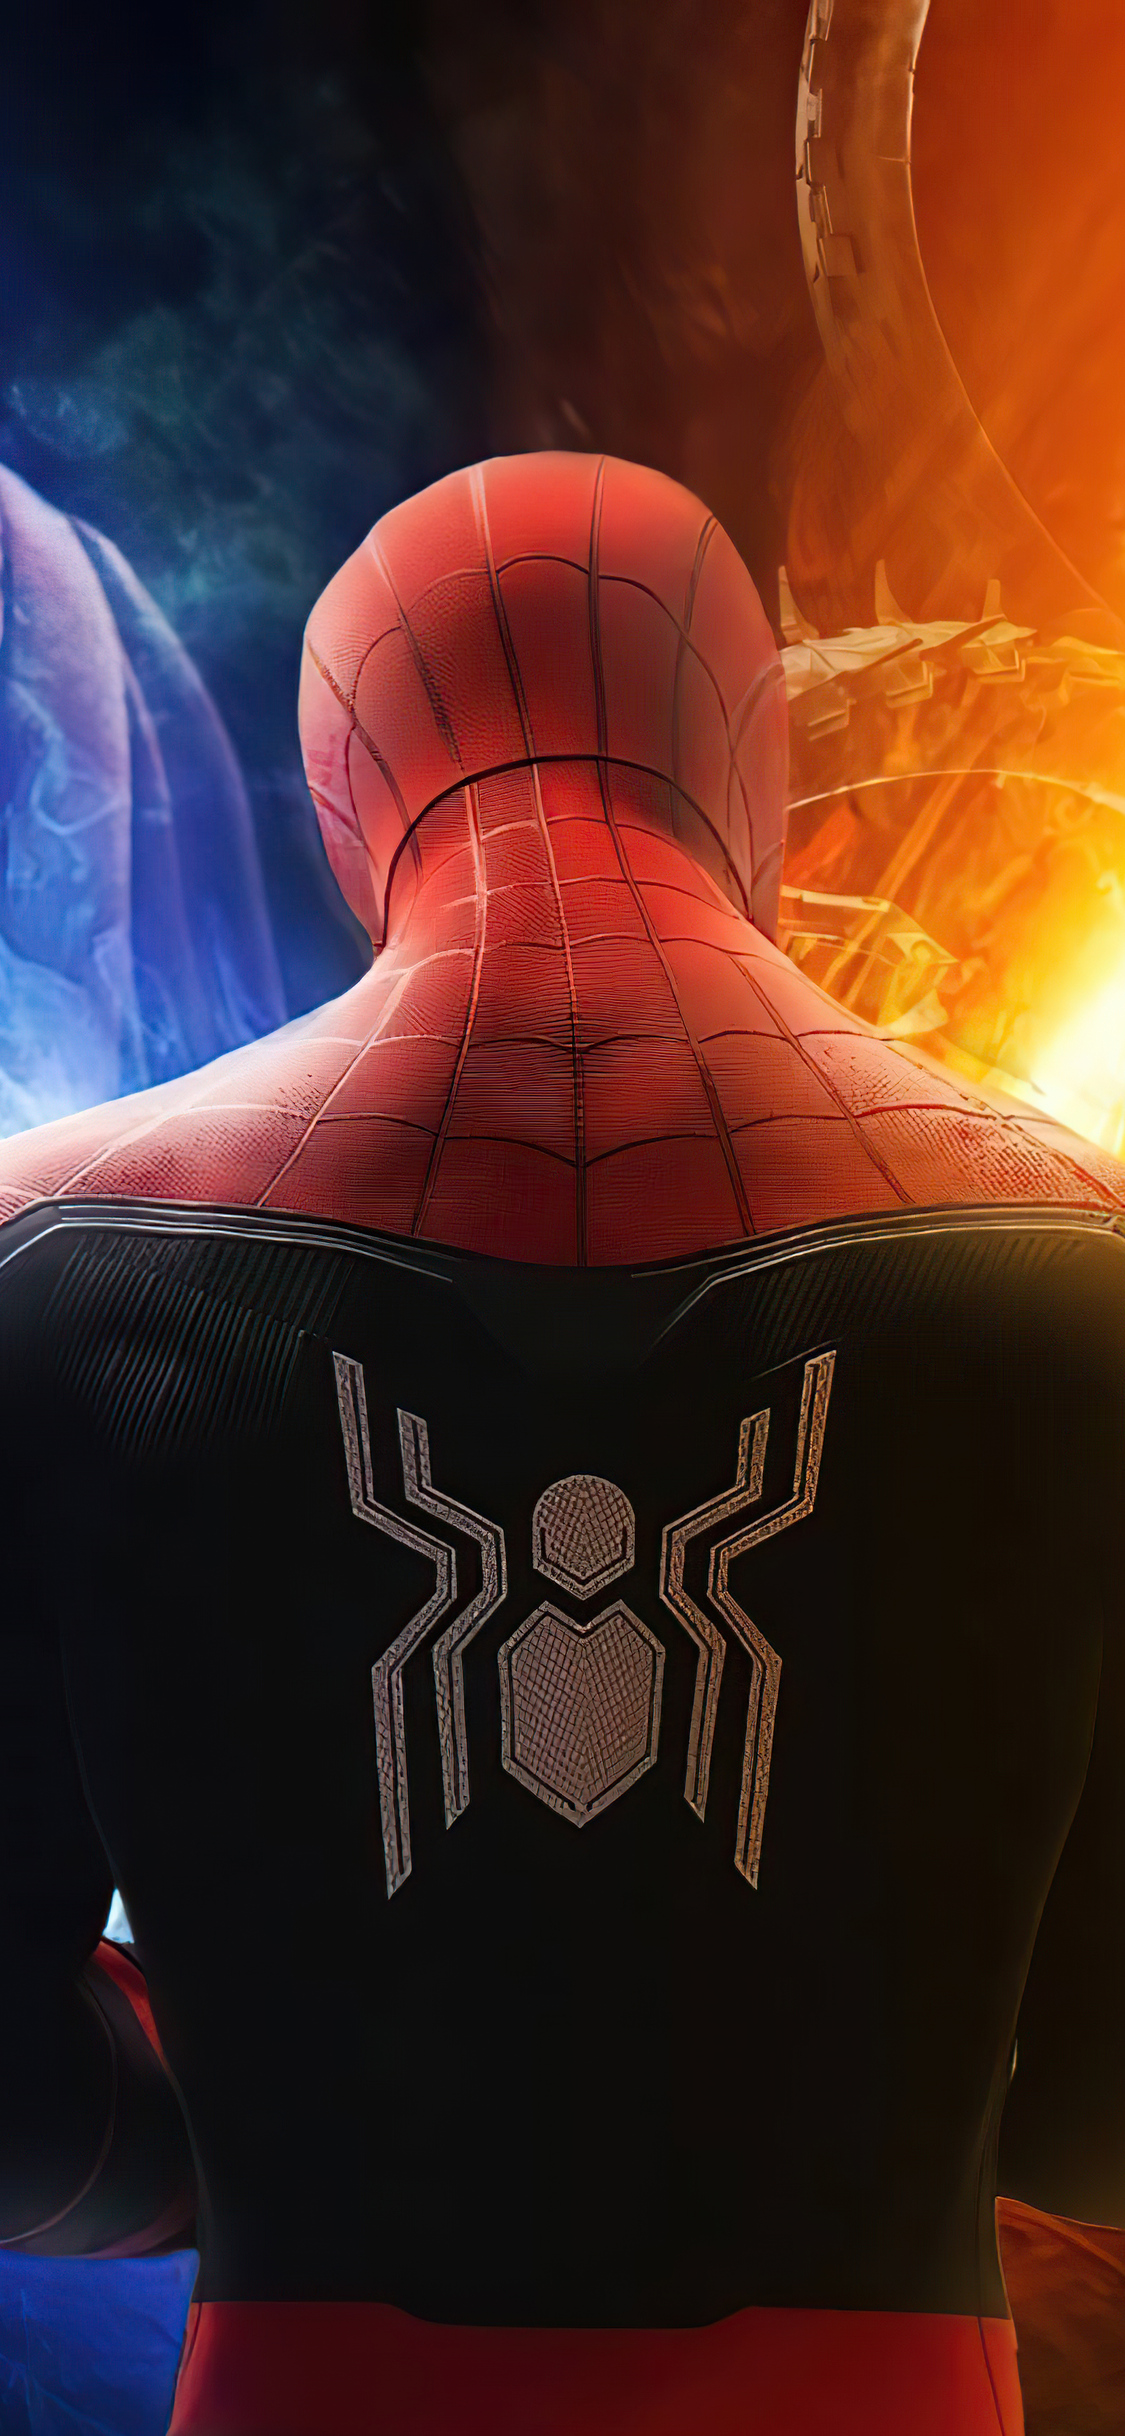 Spiderman iphone wallpaper HD